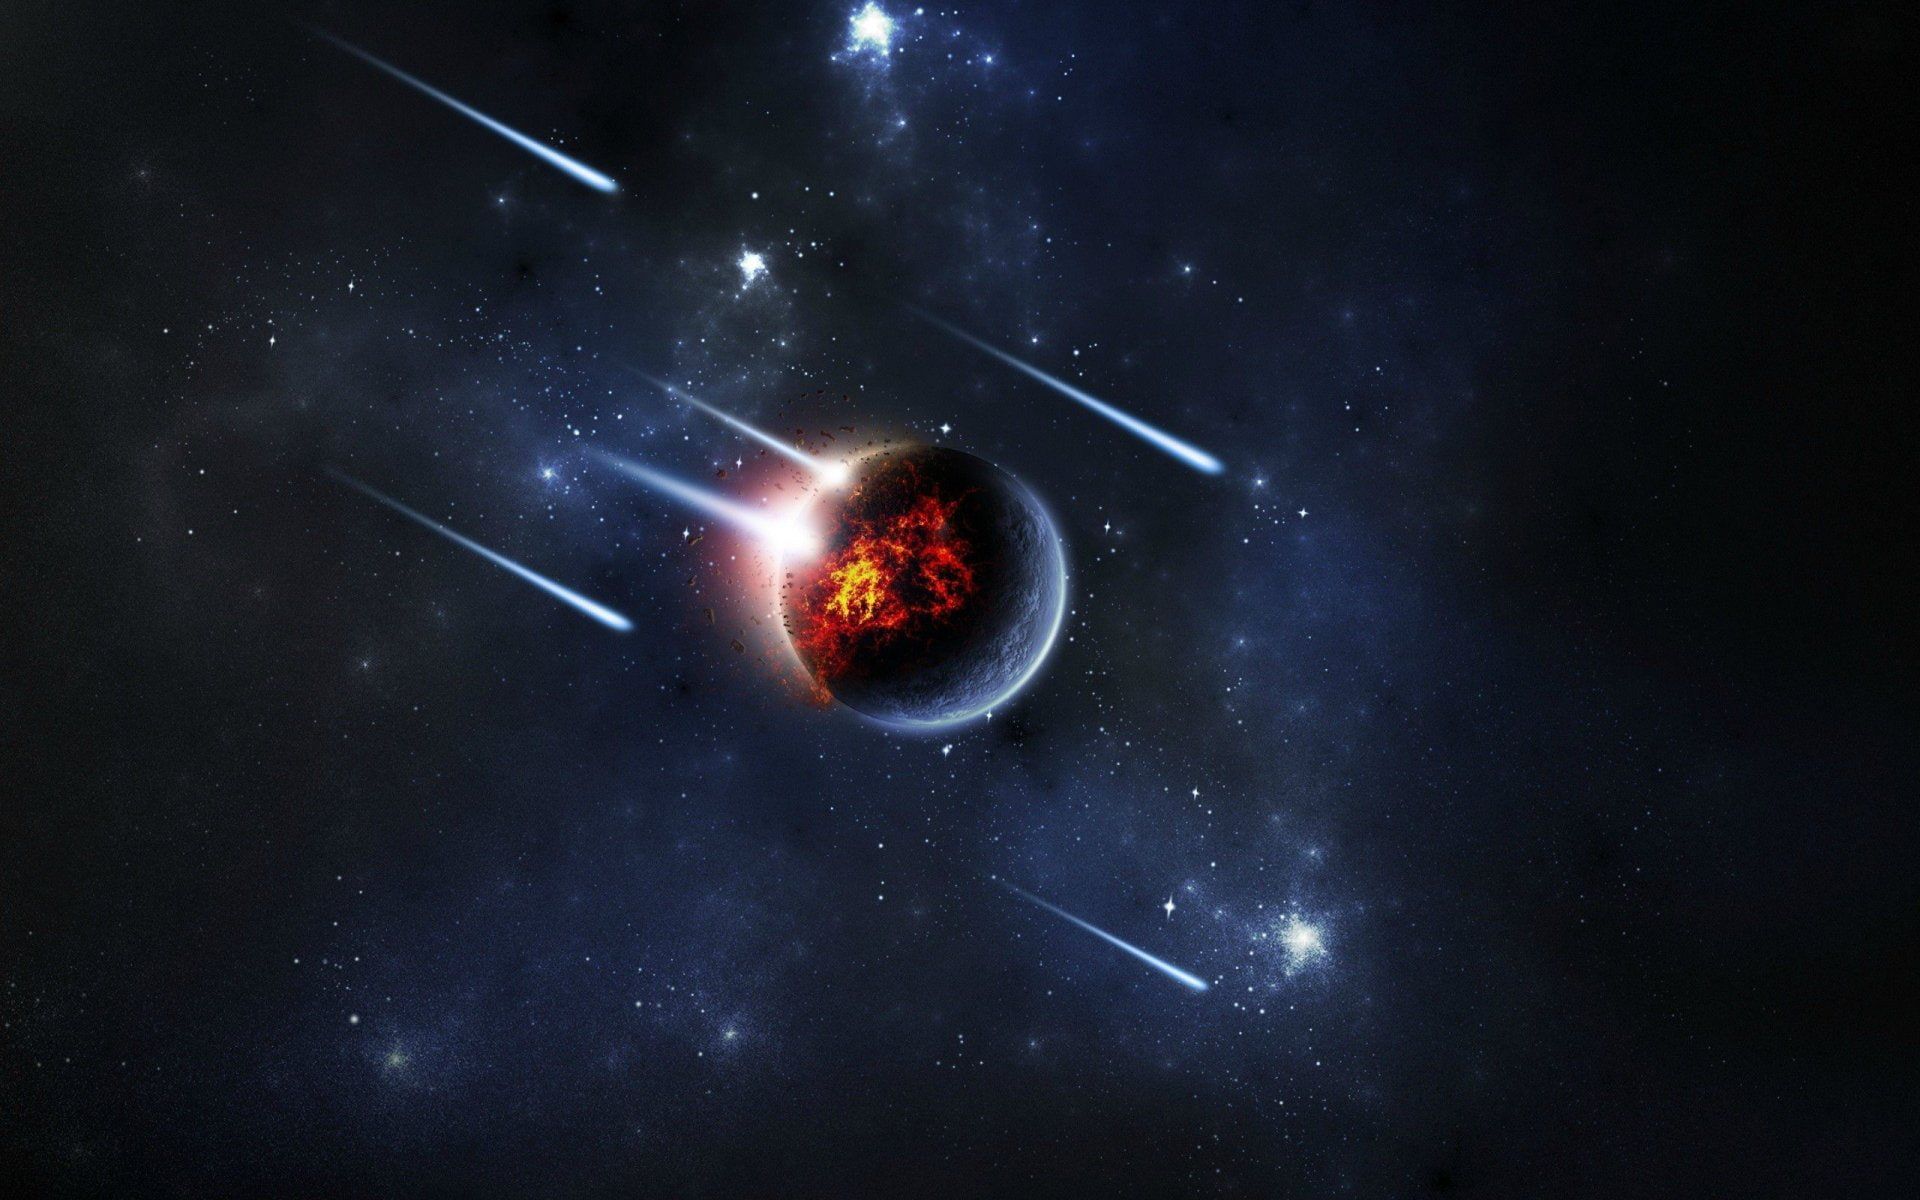 Meteor shower HD wallpaper free download